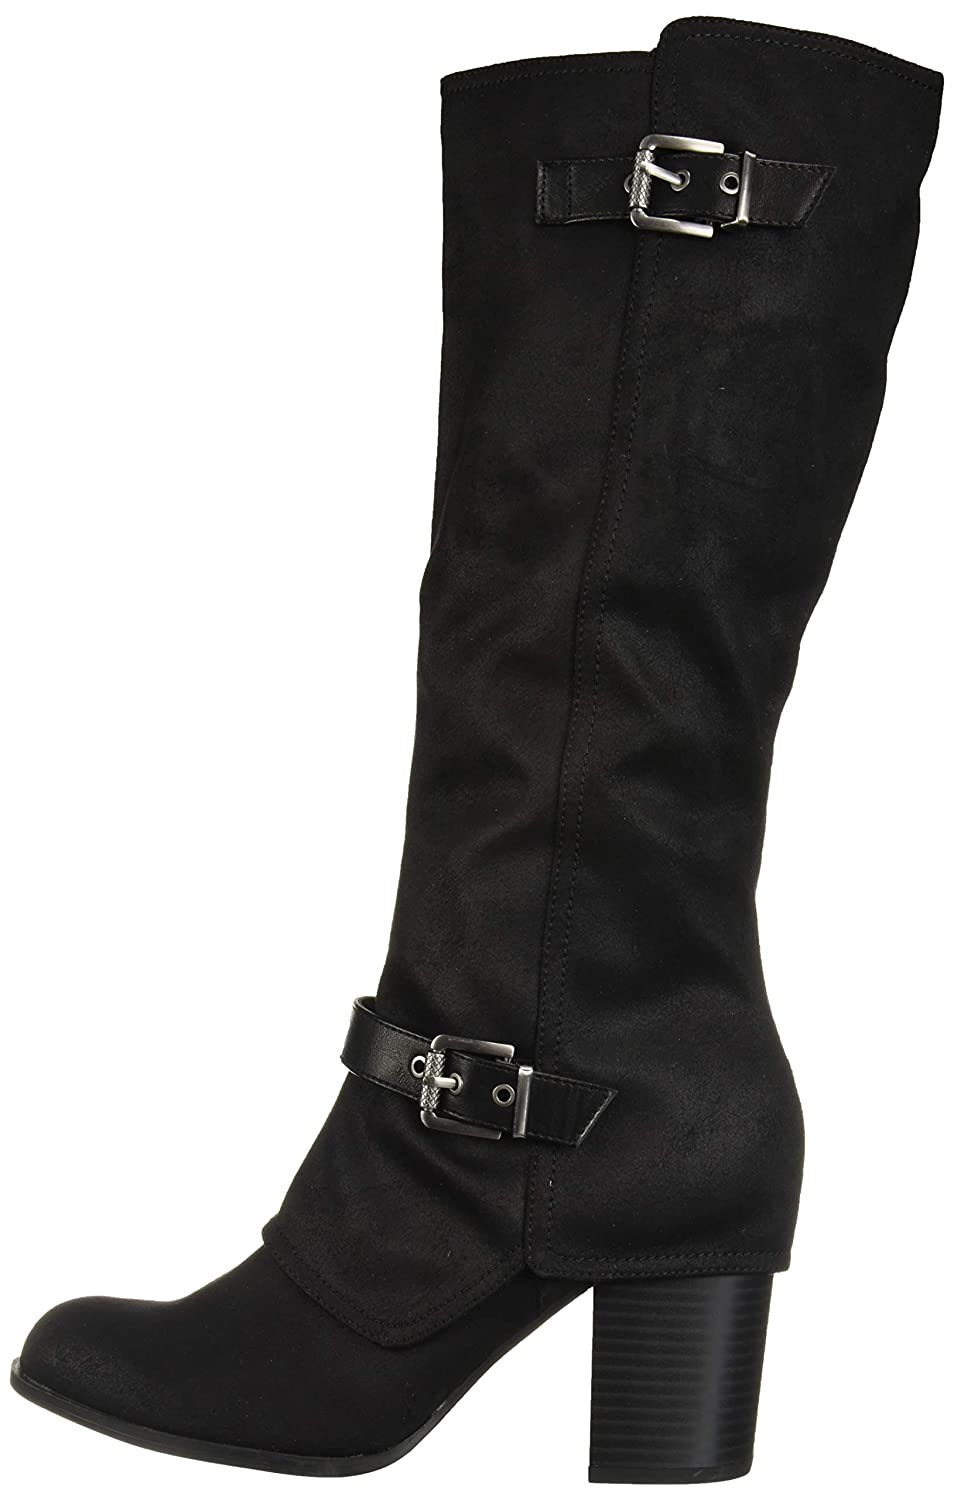 Fergalicious Women's Connor Knee High Boot, Black, Size 10.0 OqaA | eBay